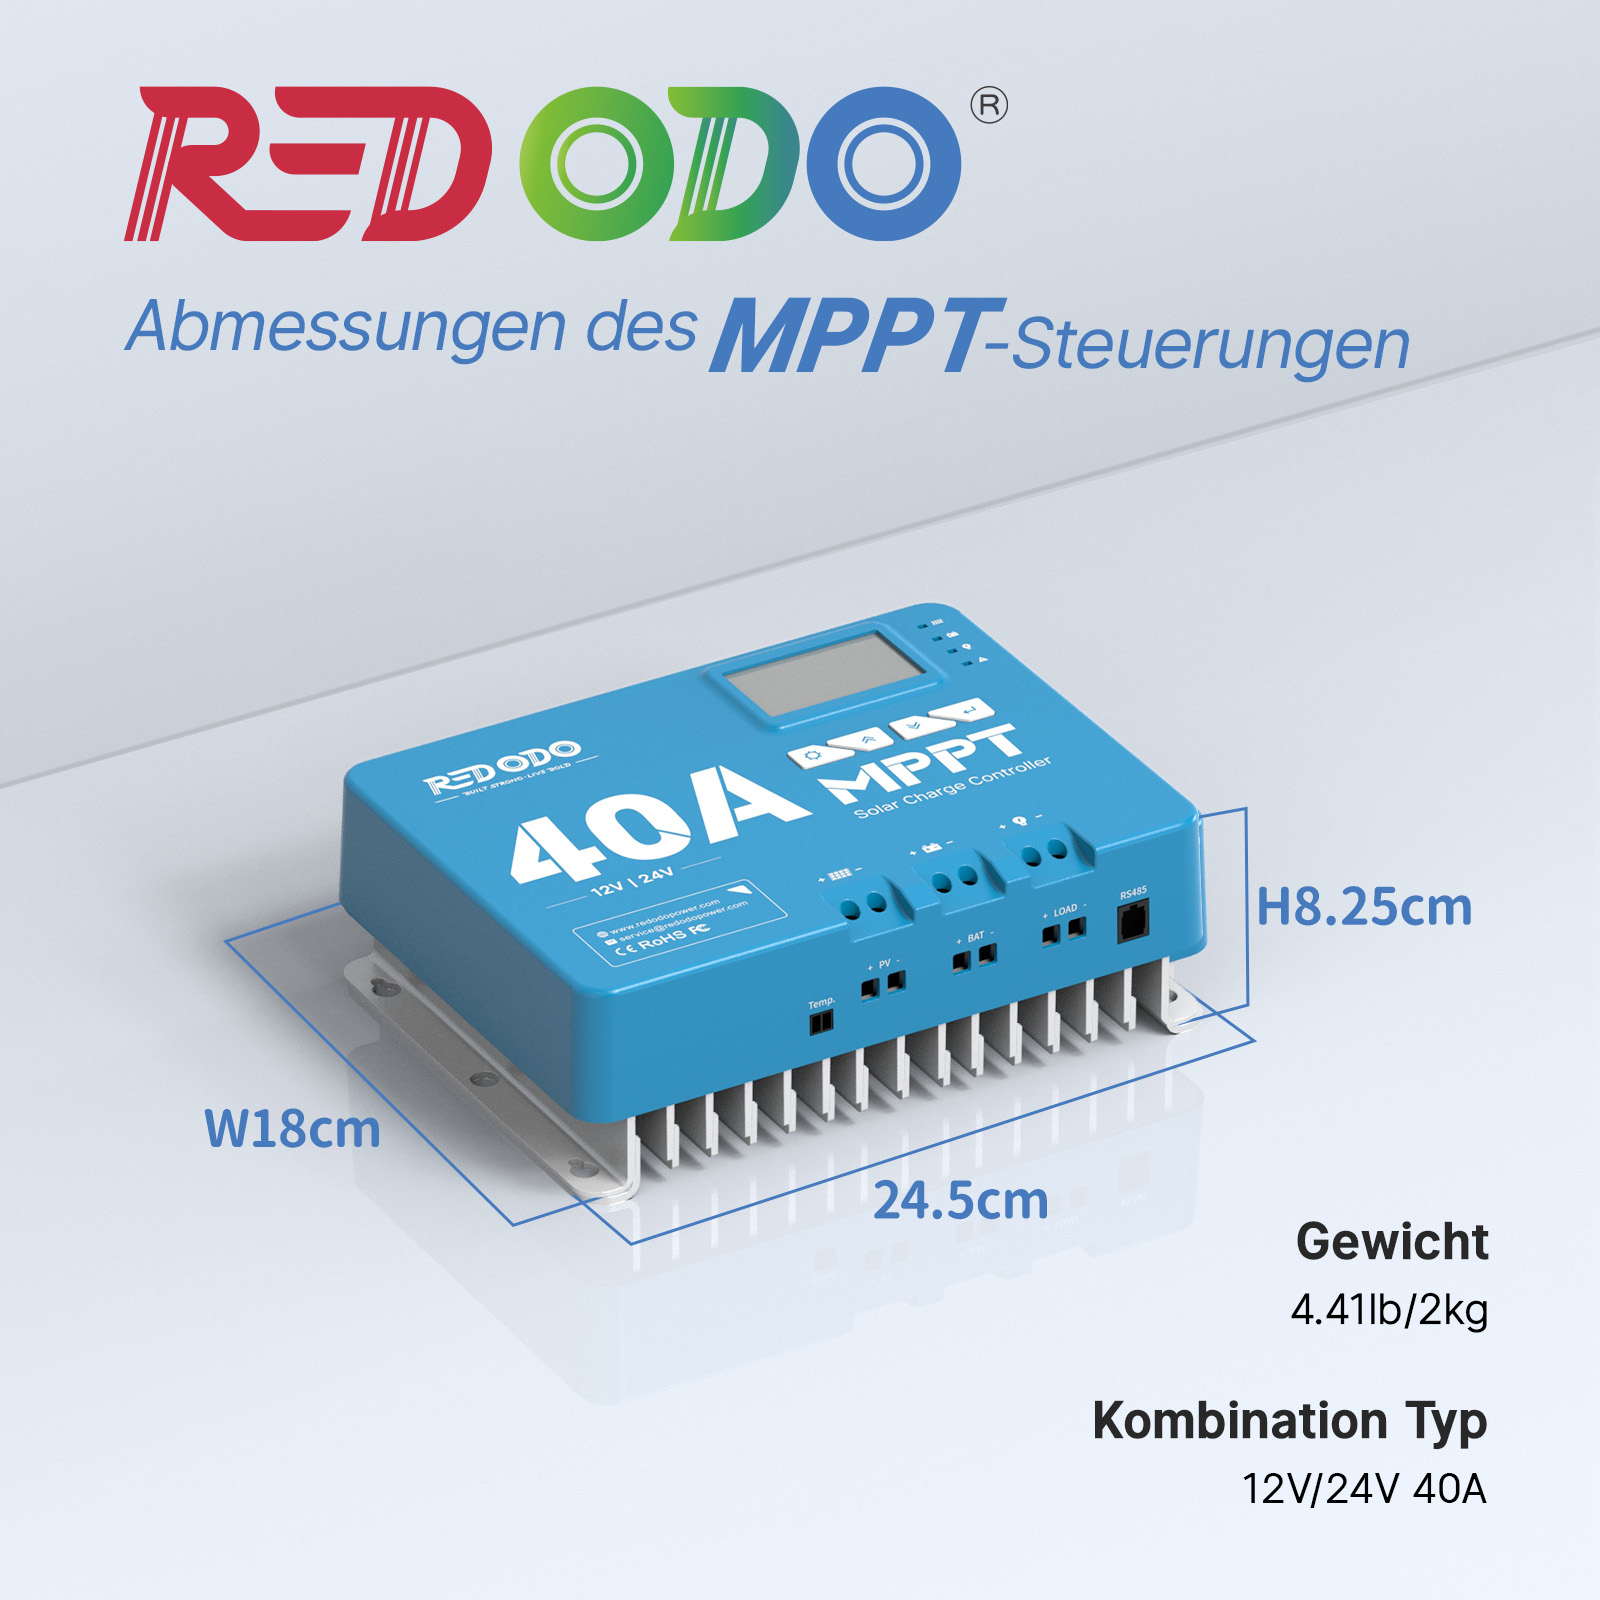 Redodo 40A MPPT 12V/24V Auto DC Input Solarladeregler Mit Bluetooth Adapter redodopower-de